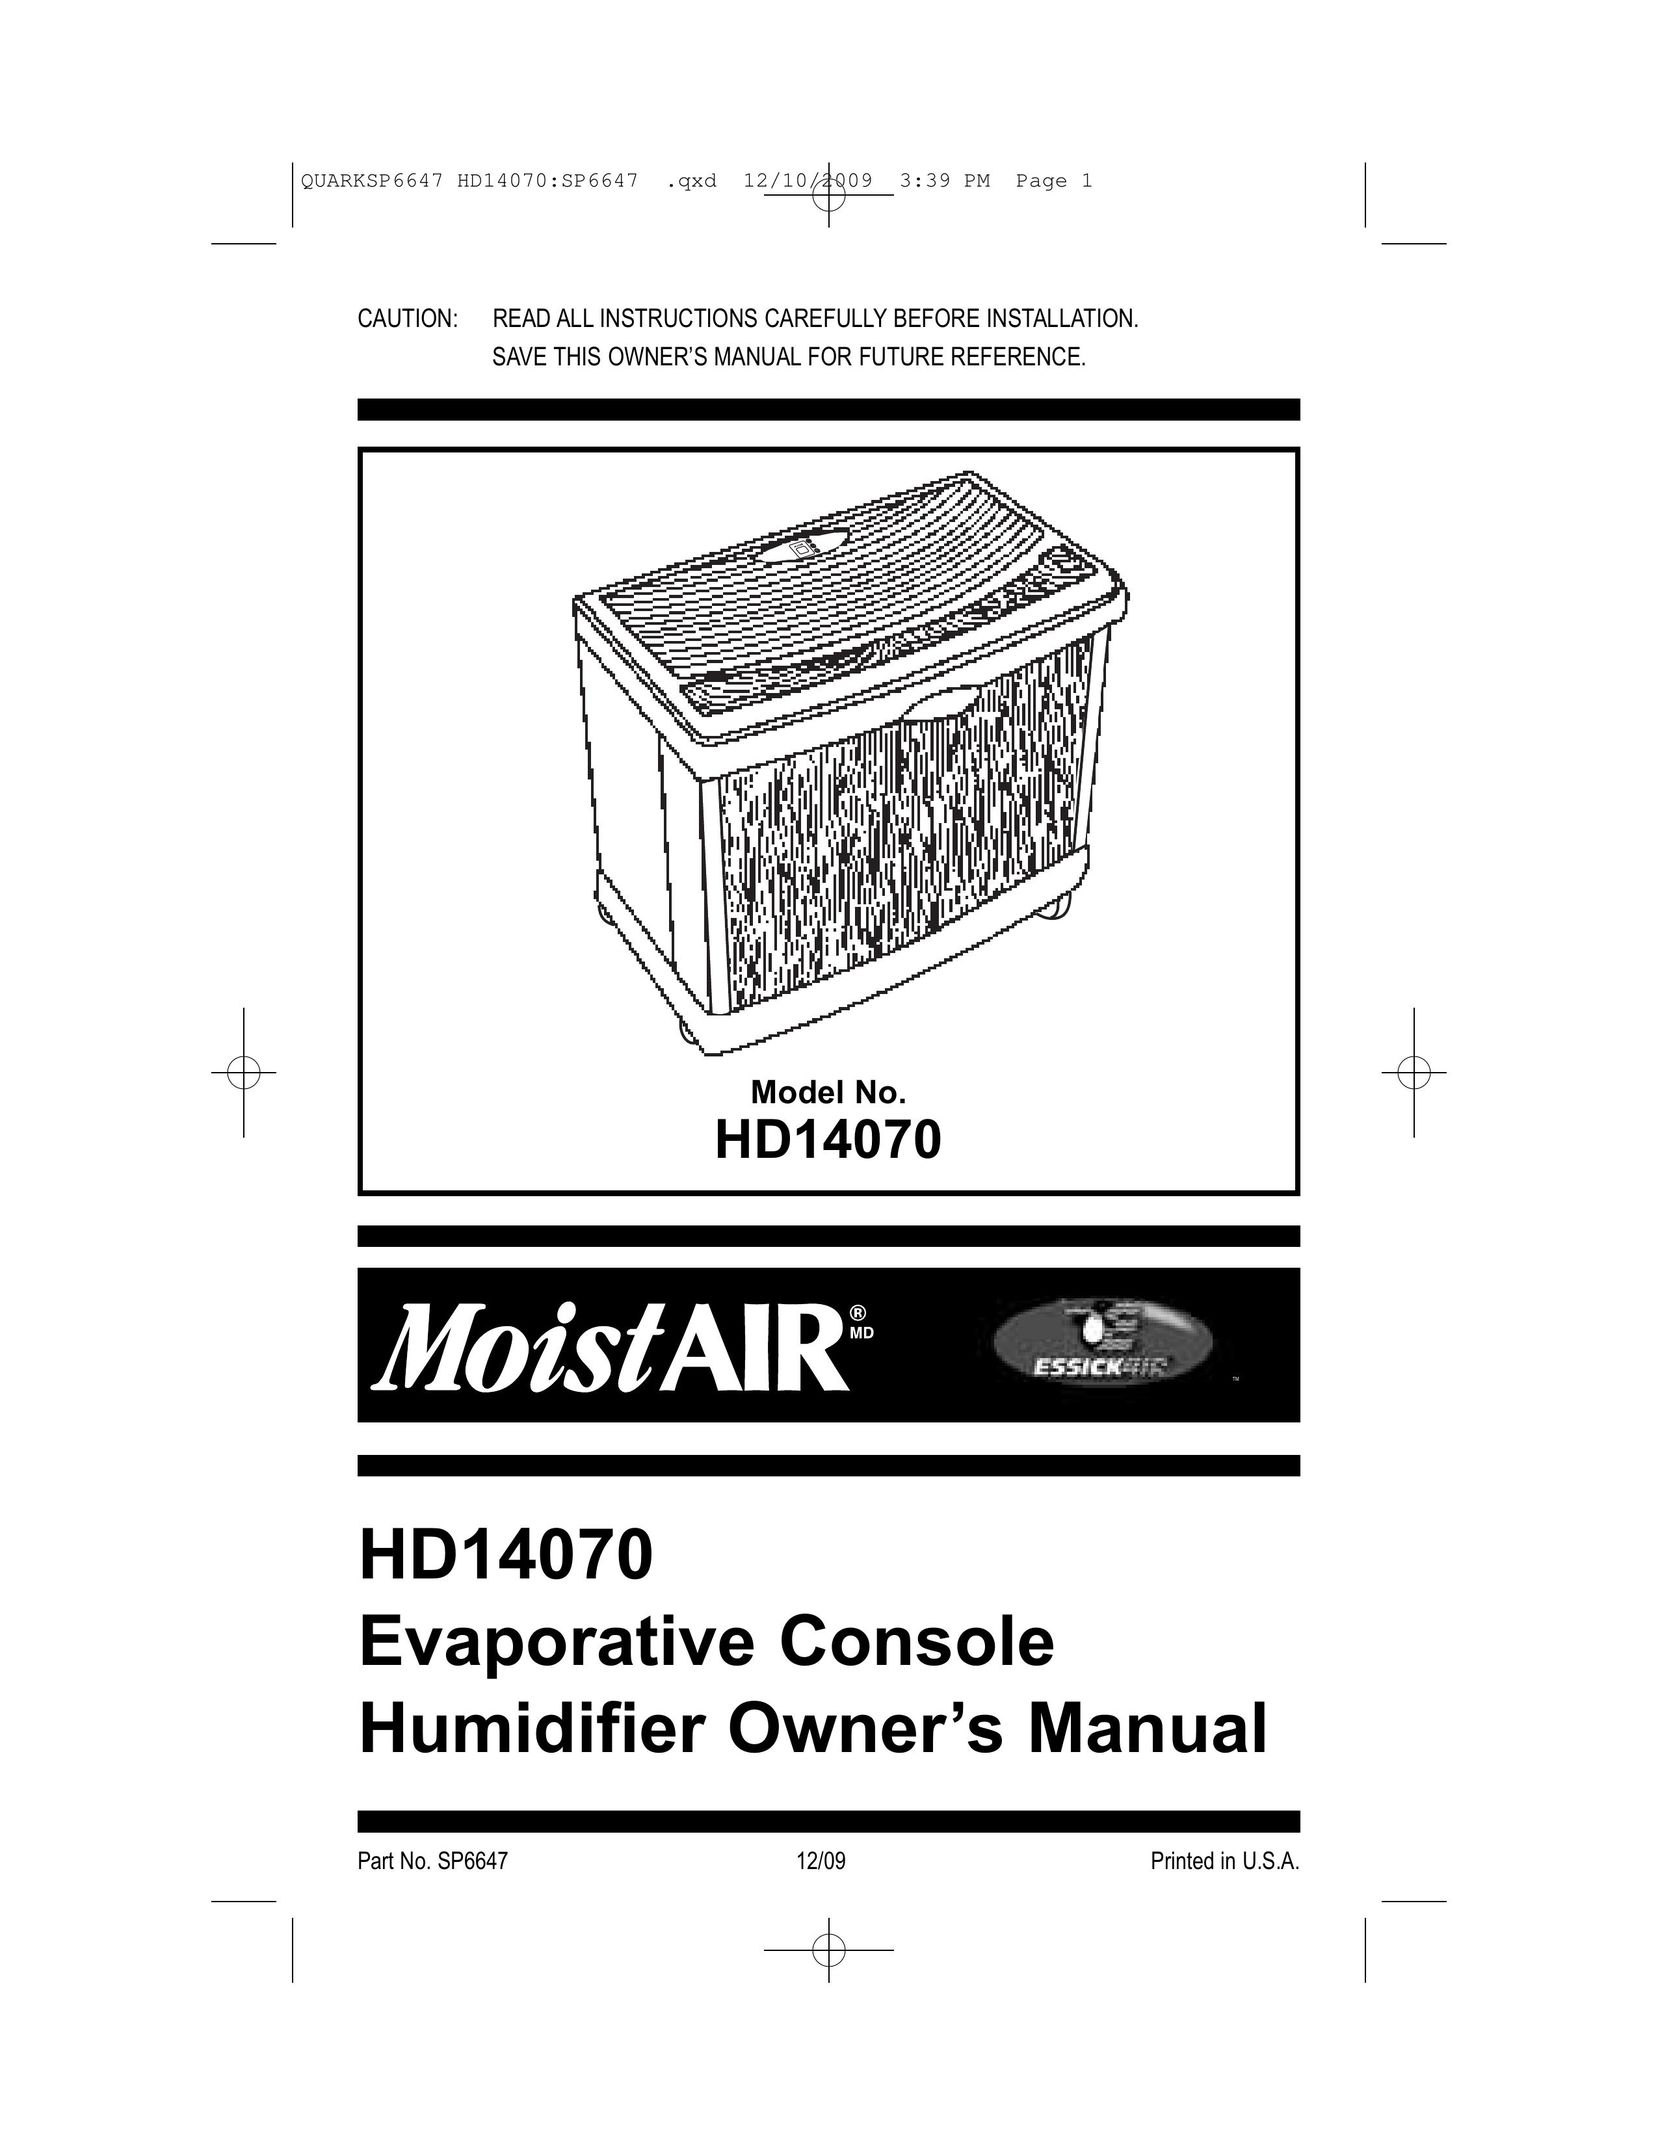 MoistAir HD14070 Humidifier User Manual